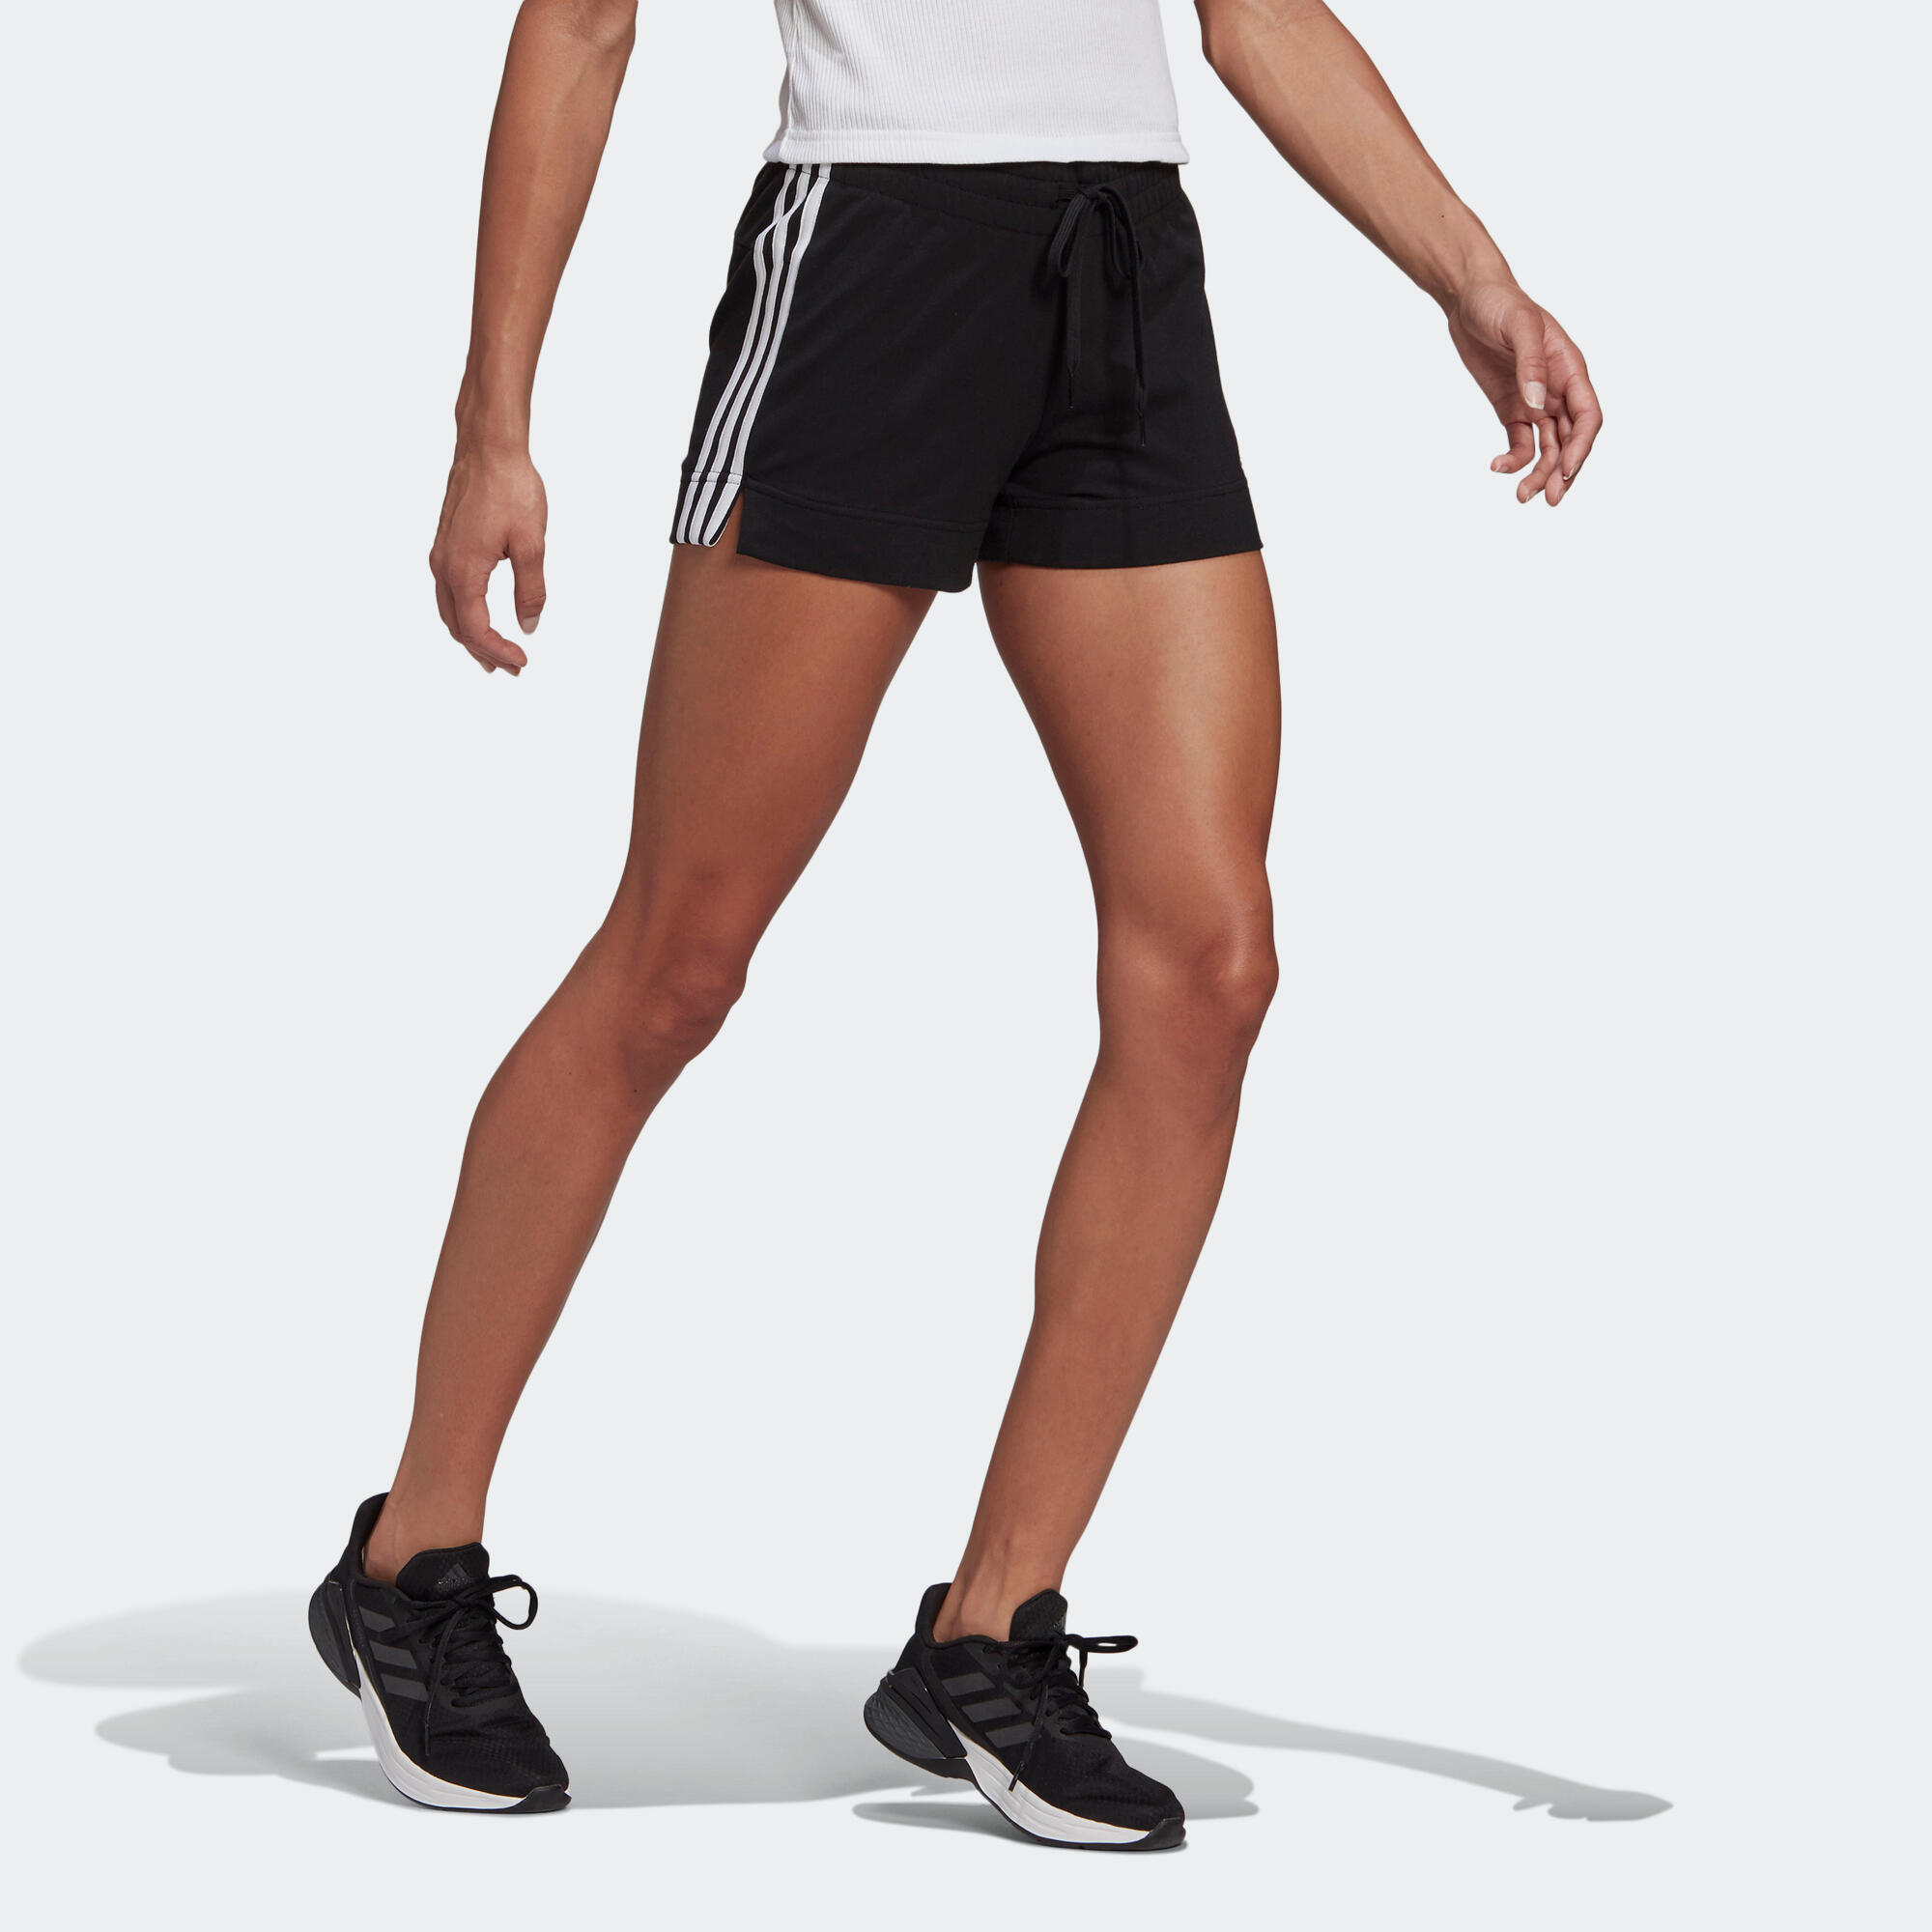 Women's Soft Training Fitness Shorts - Black 2/6